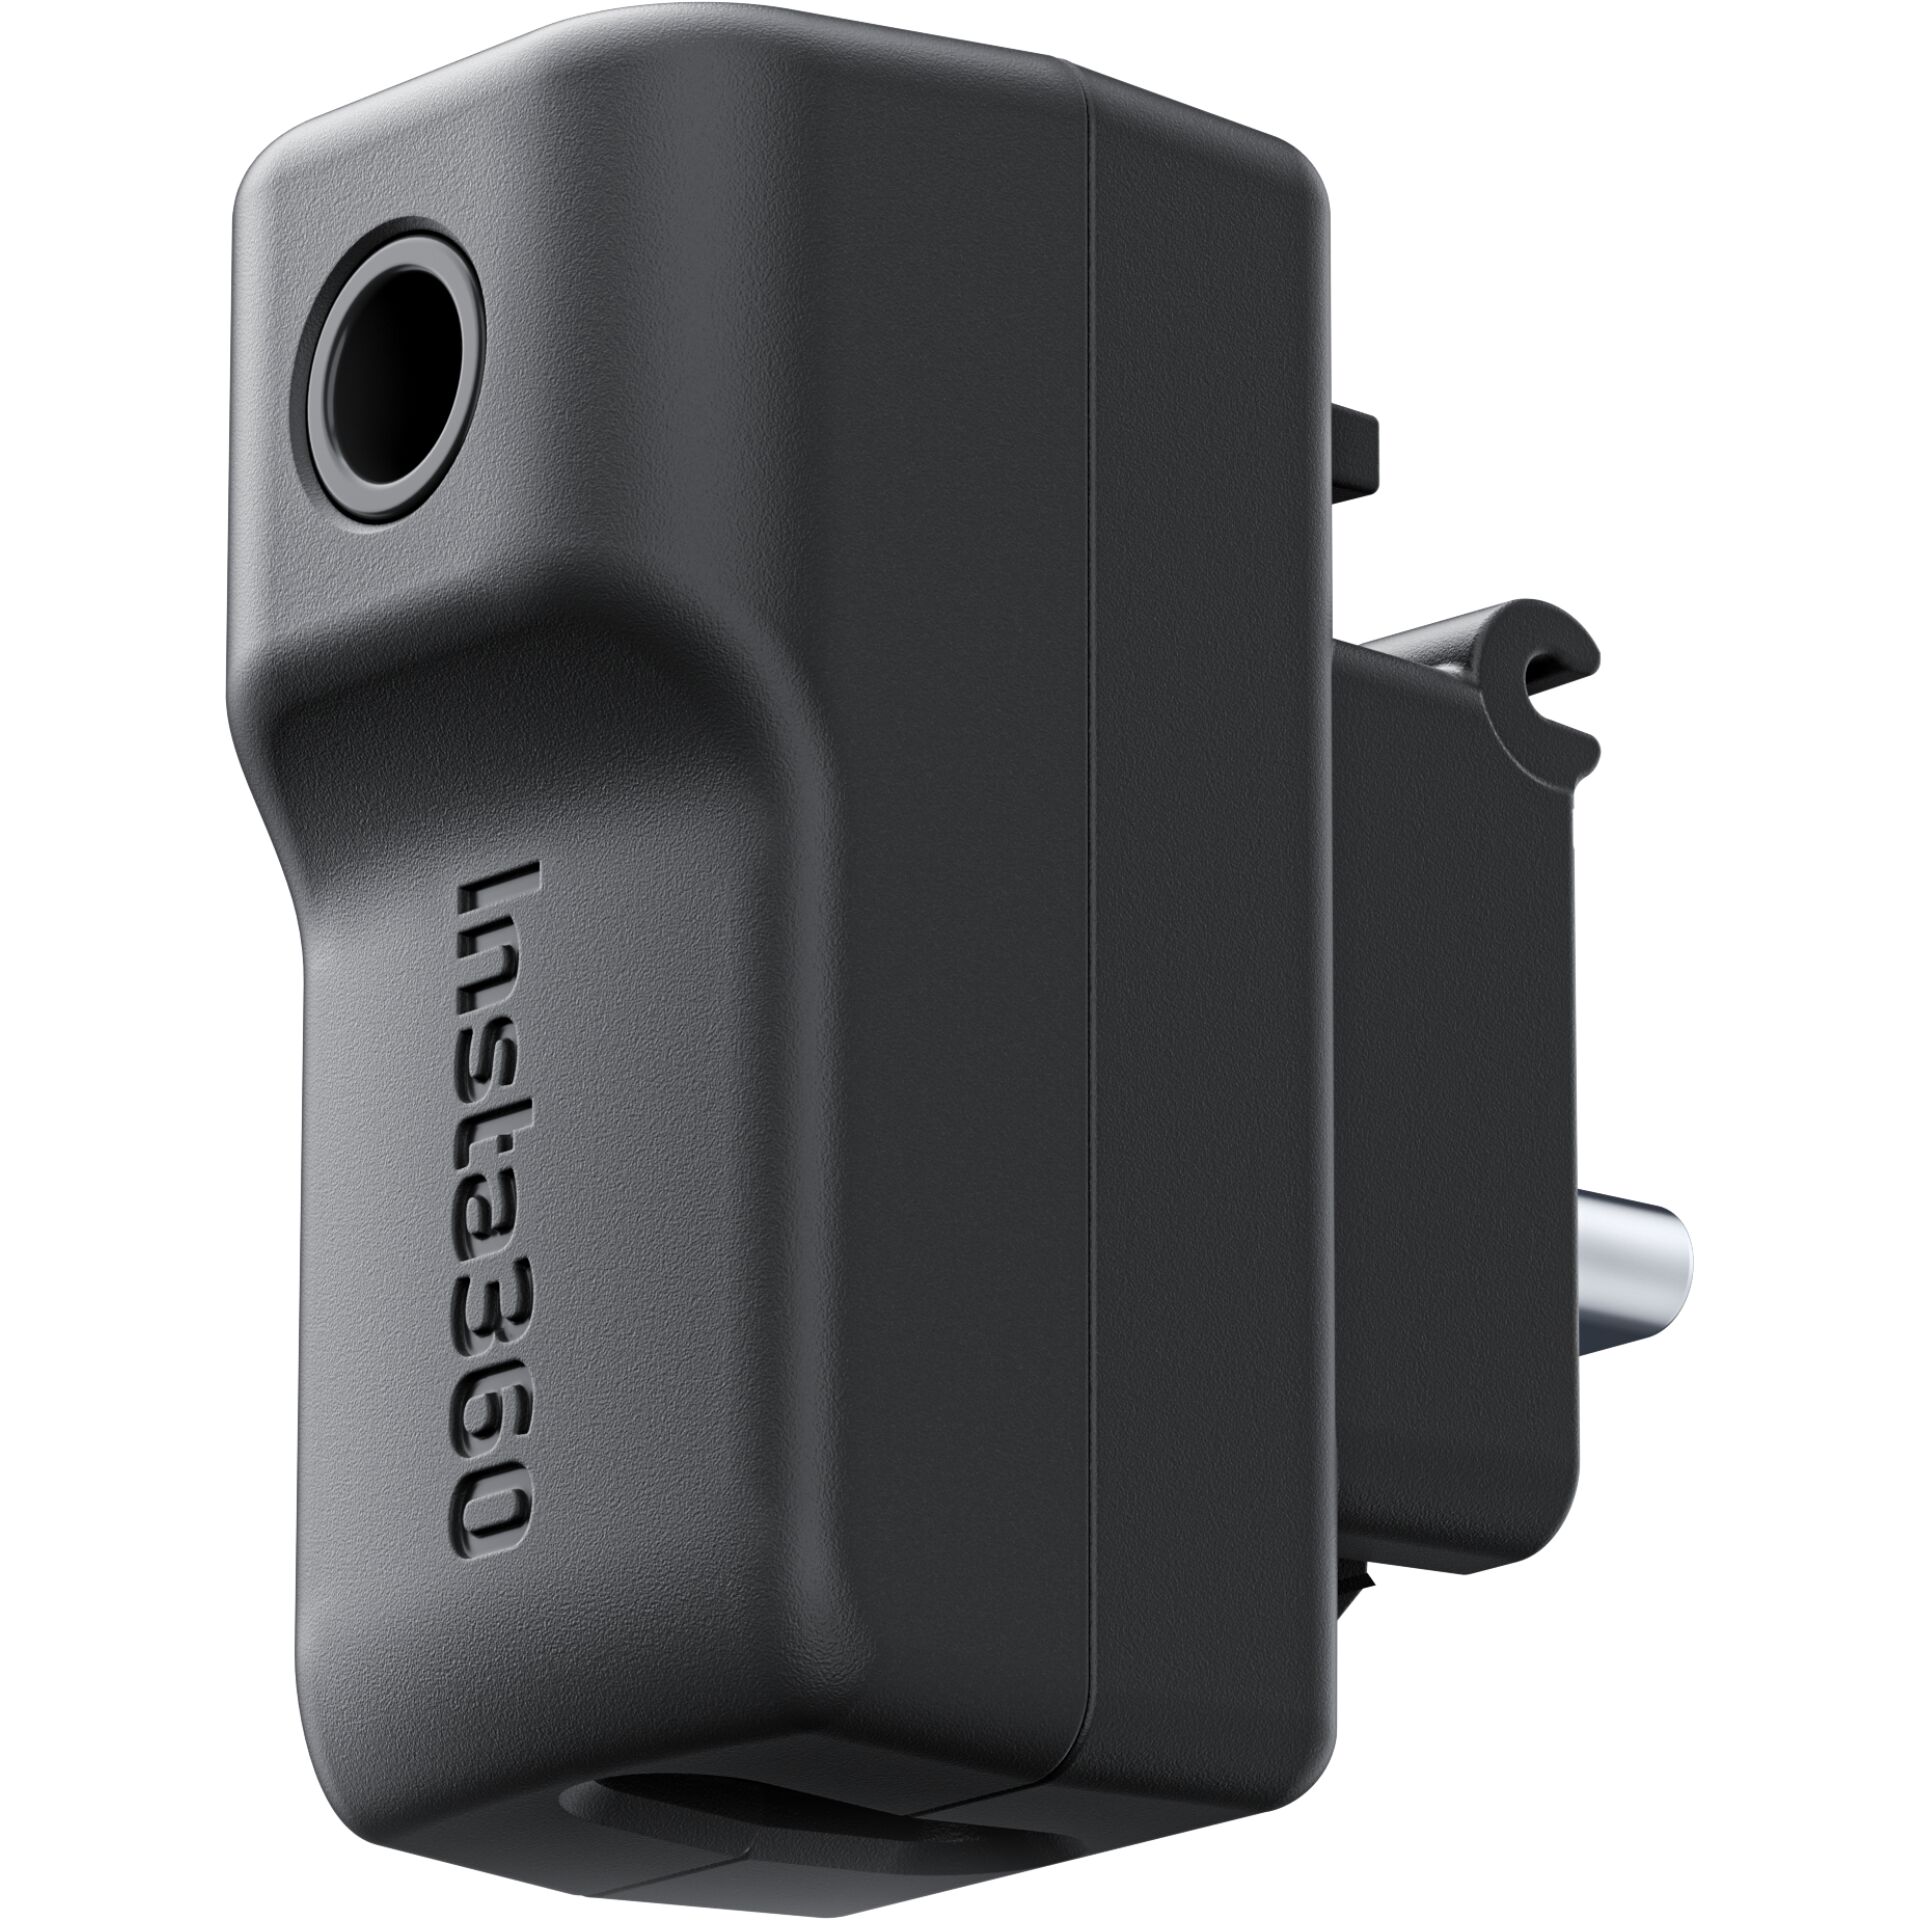 Insta360 CINSBBMC Zubehör für Actionkameras Kameramikrofonadapter